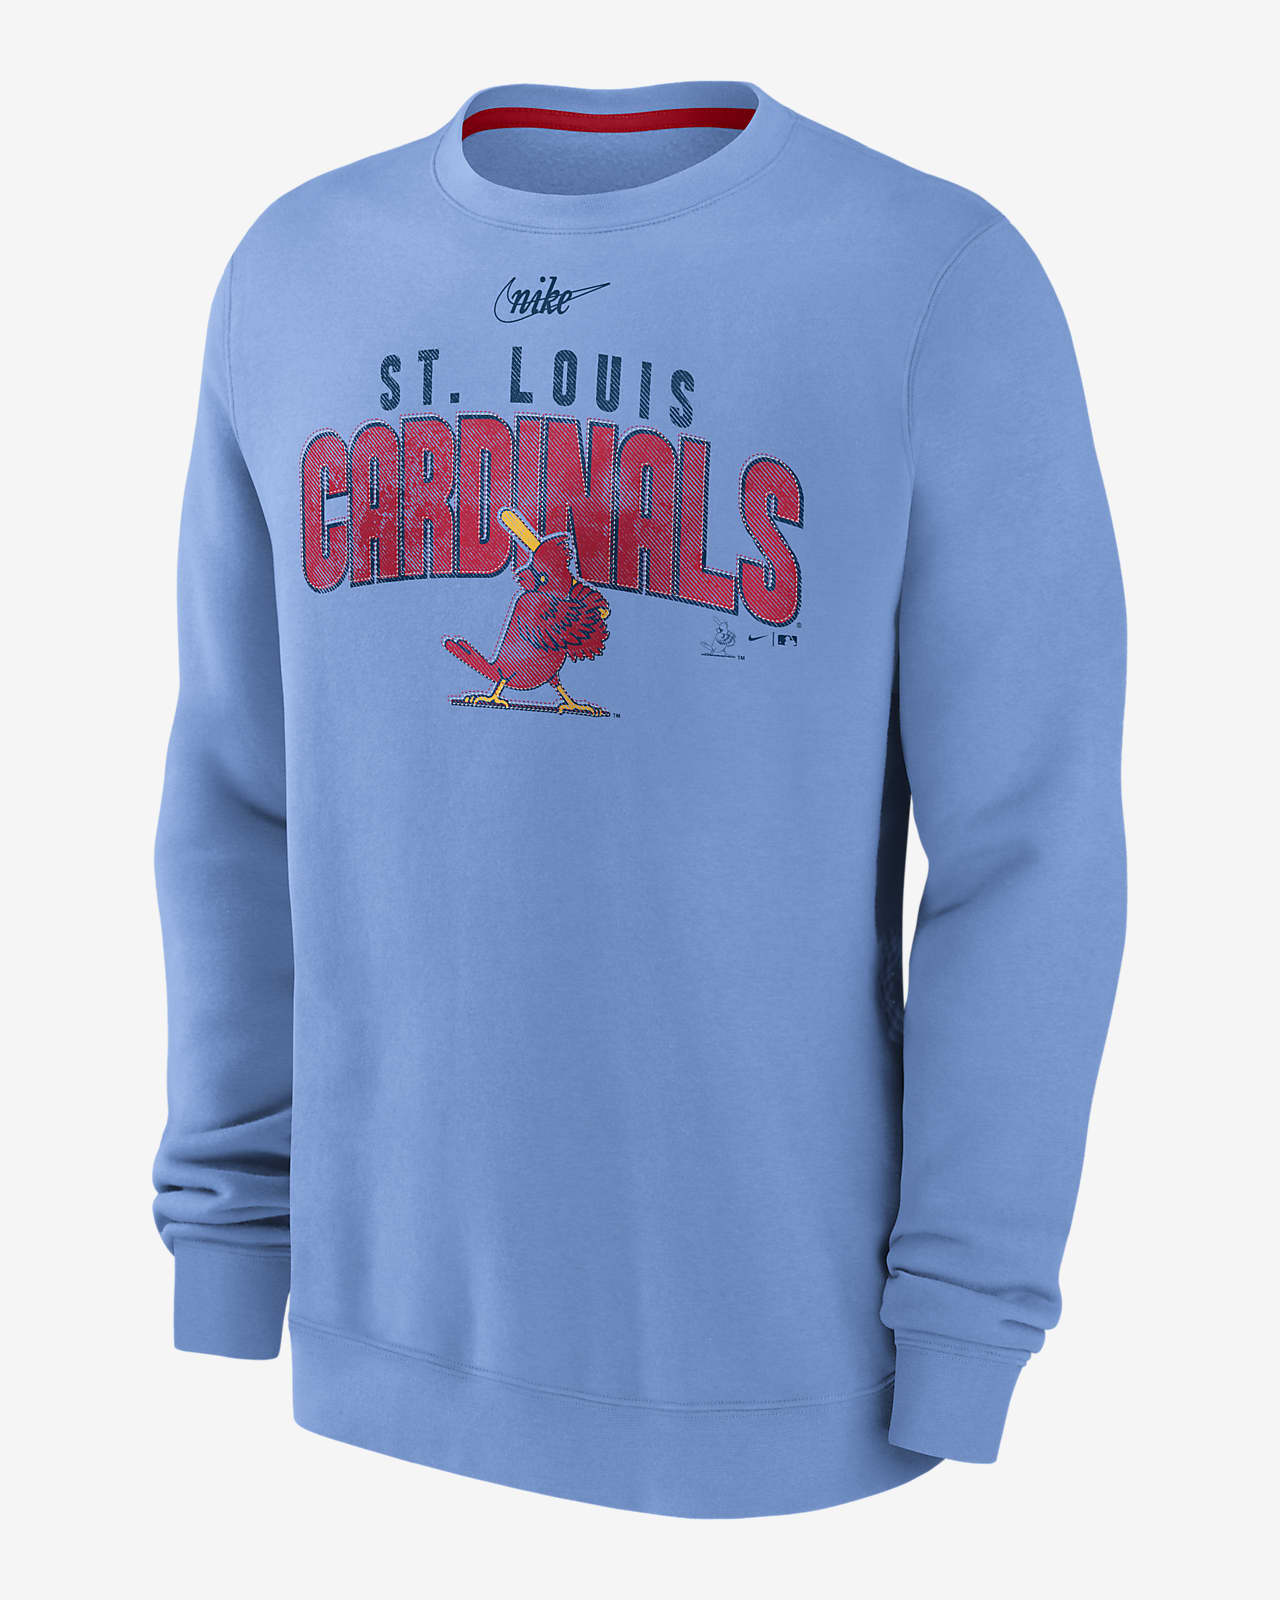 st louis cardinals shirts for sale